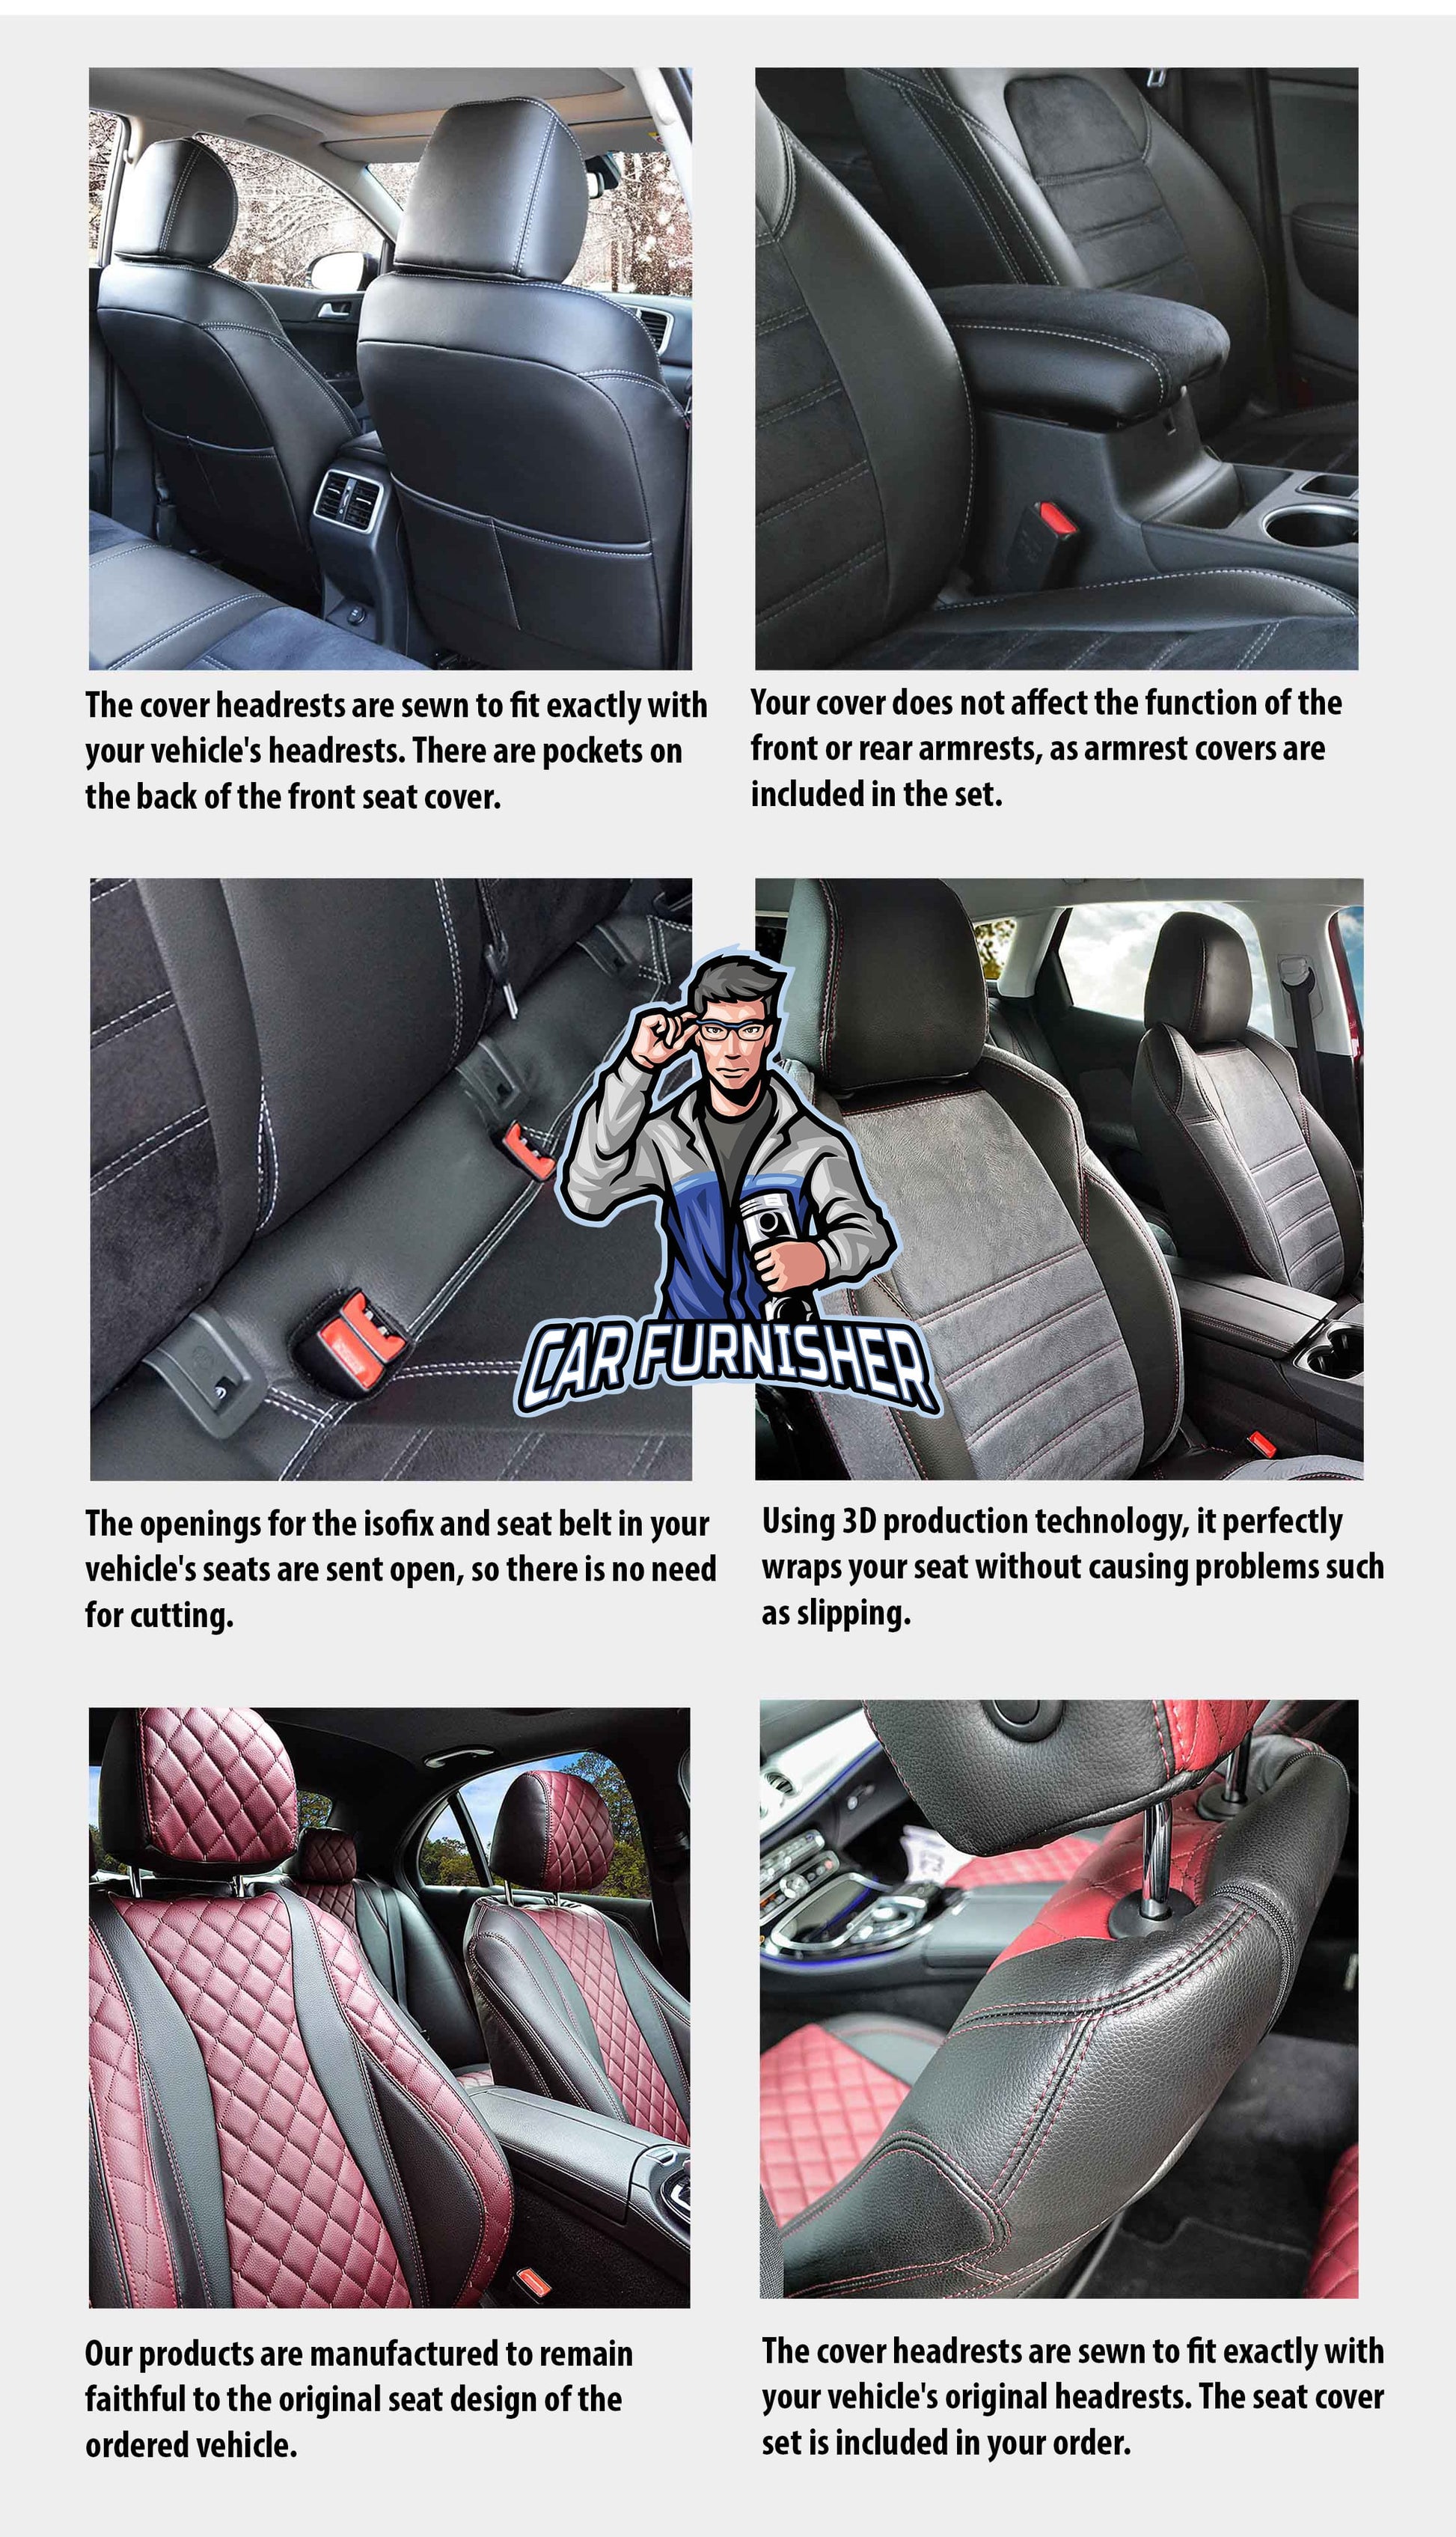 Mitsubishi Spacestar Seat Cover Camouflage Waterproof Design Alps Camo Waterproof Fabric